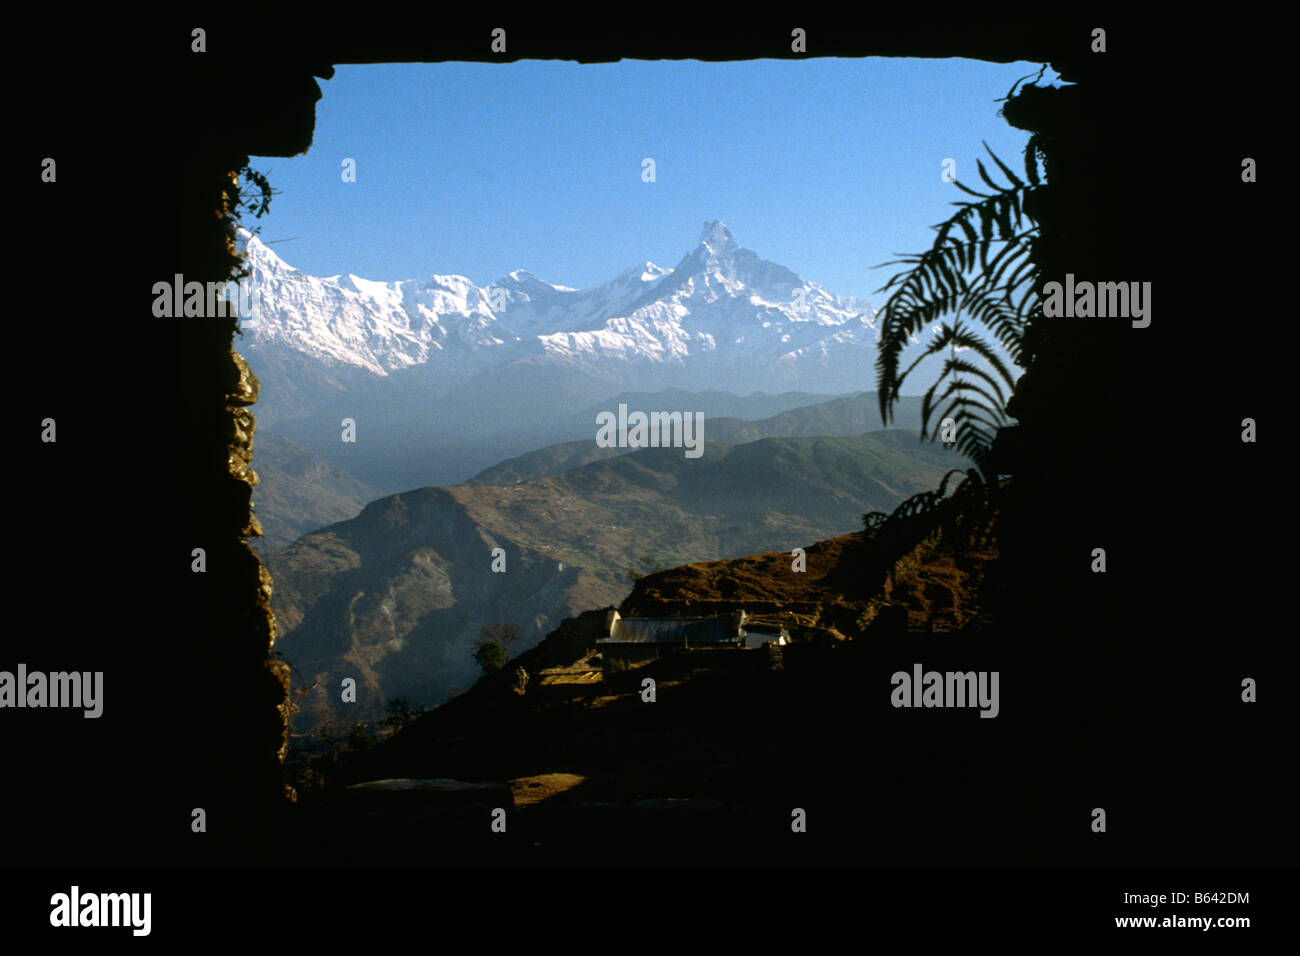 PICTURES CREDIT DOUG BLANE Trekking around the Annapurna circuit in Himalayan Kingdom of Nepal Nepalese Himalayas Stock Photo